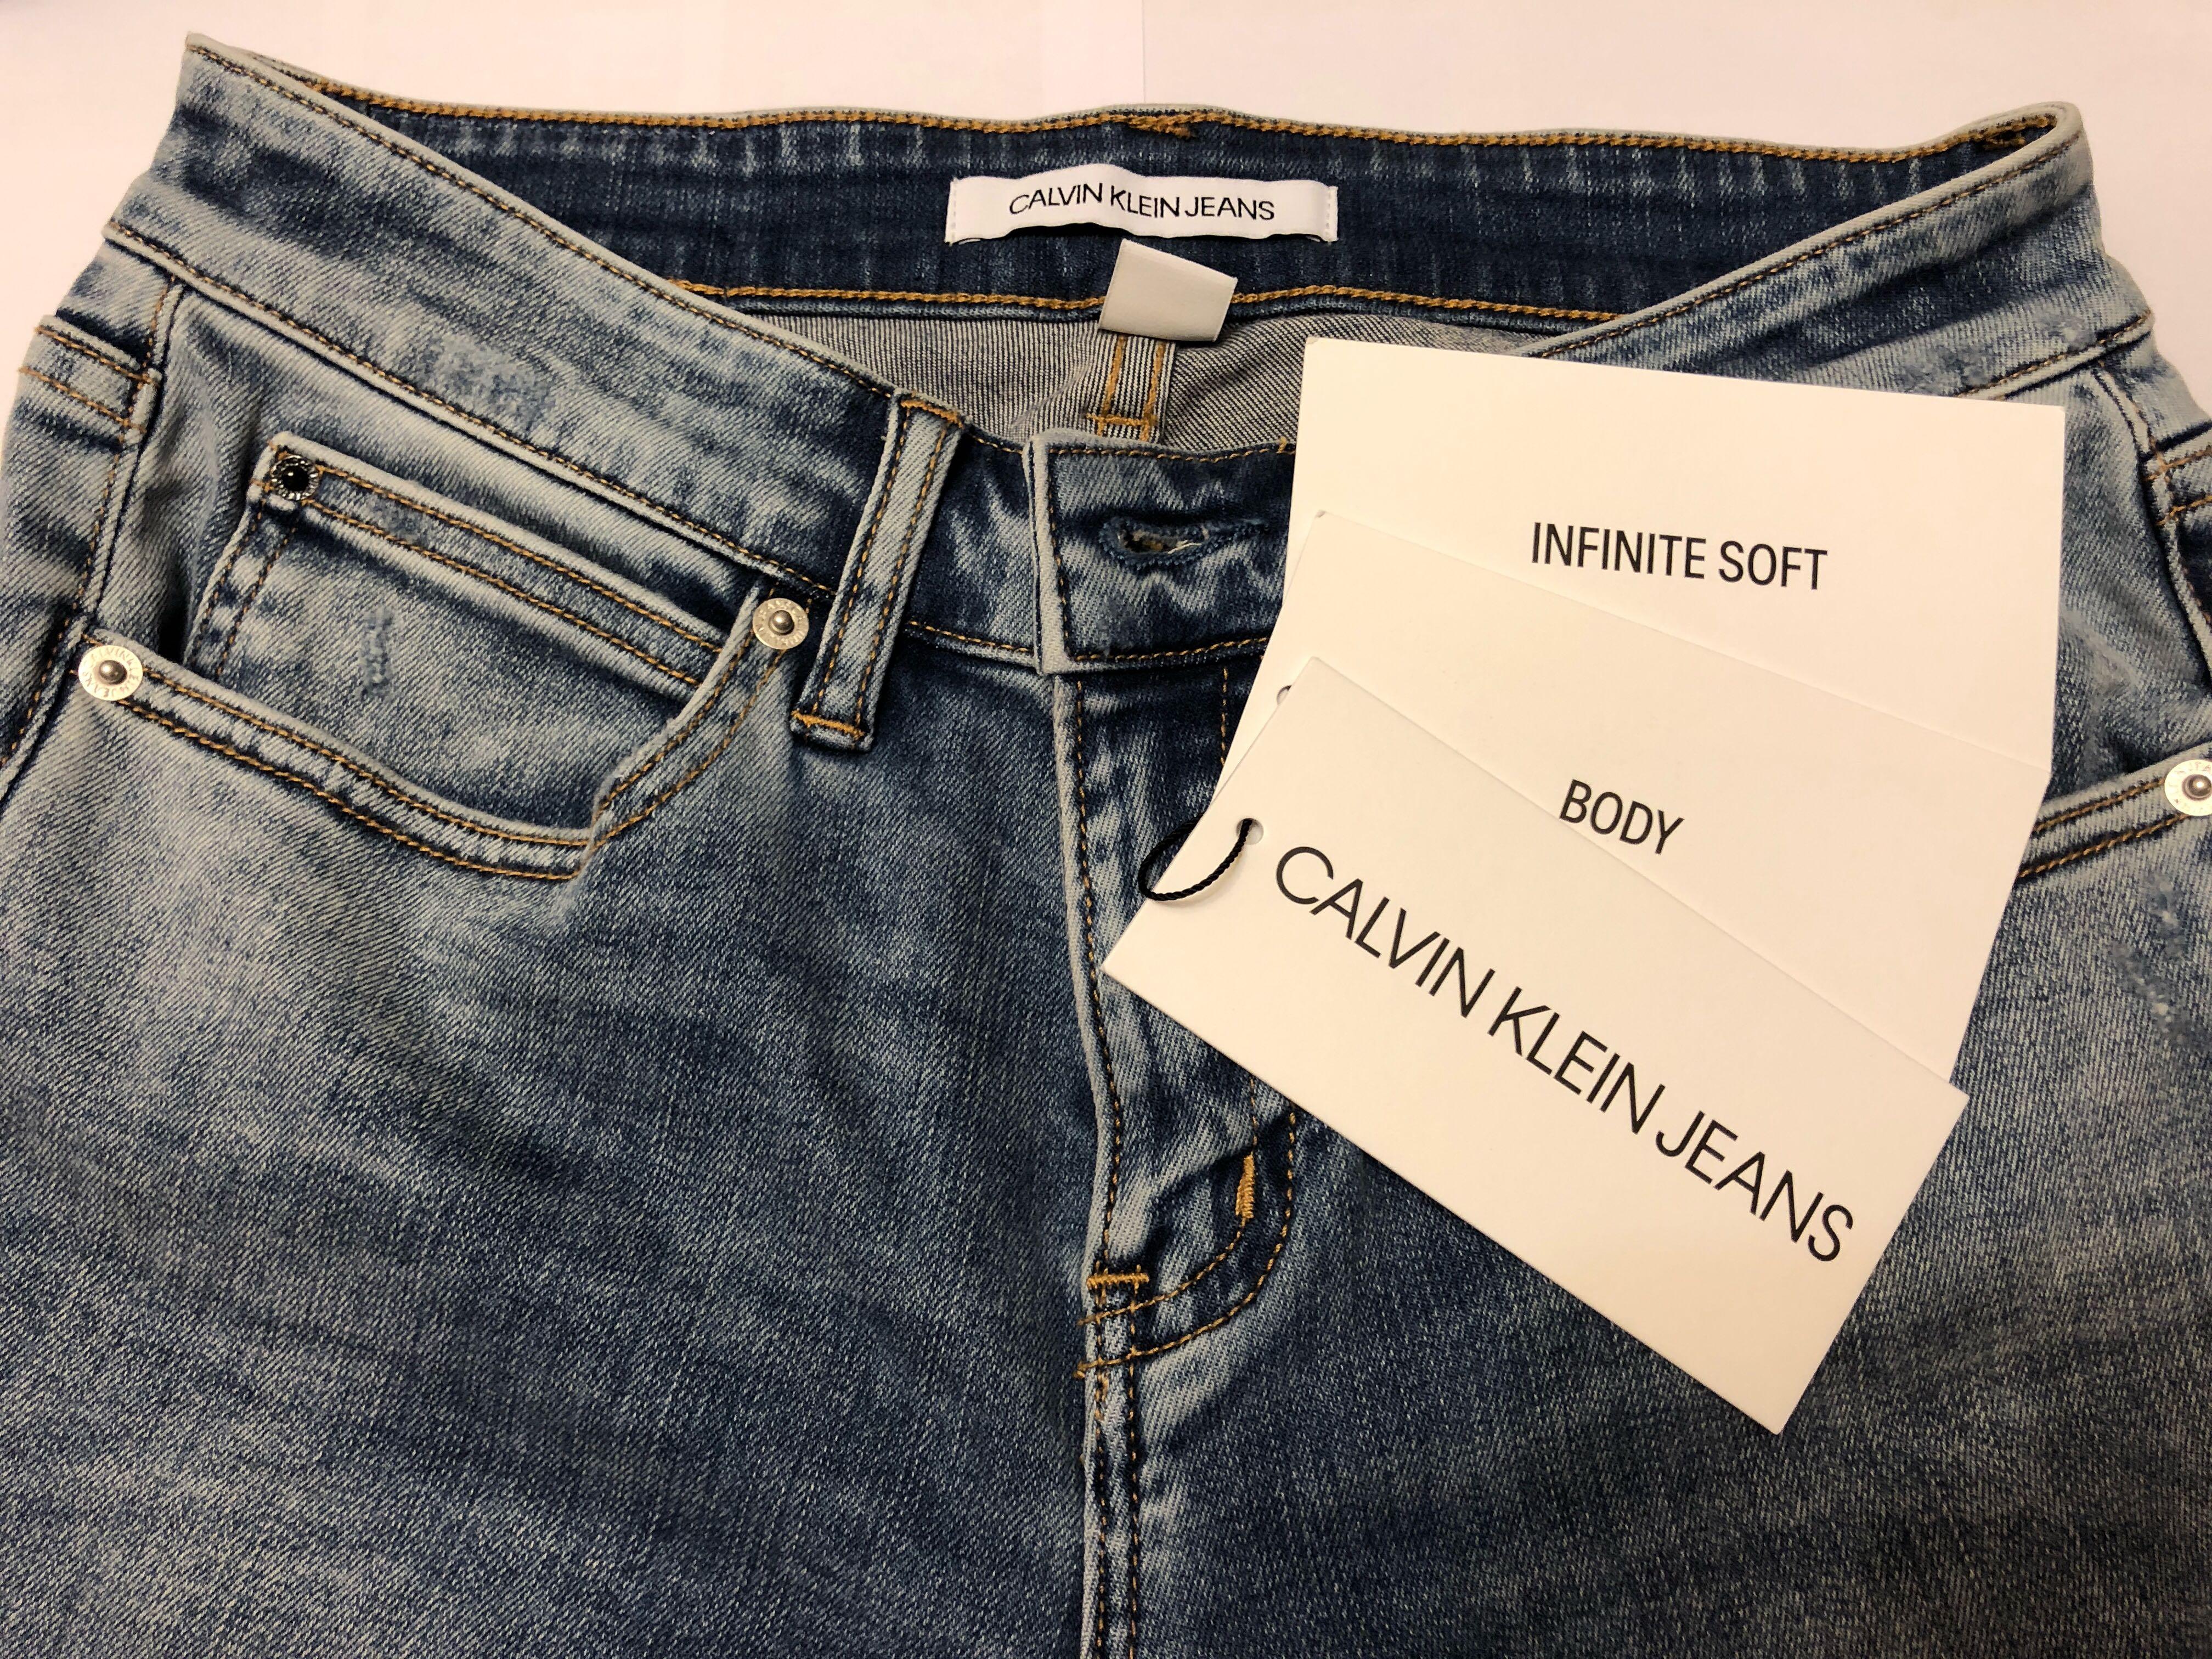 new calvin klein jeans